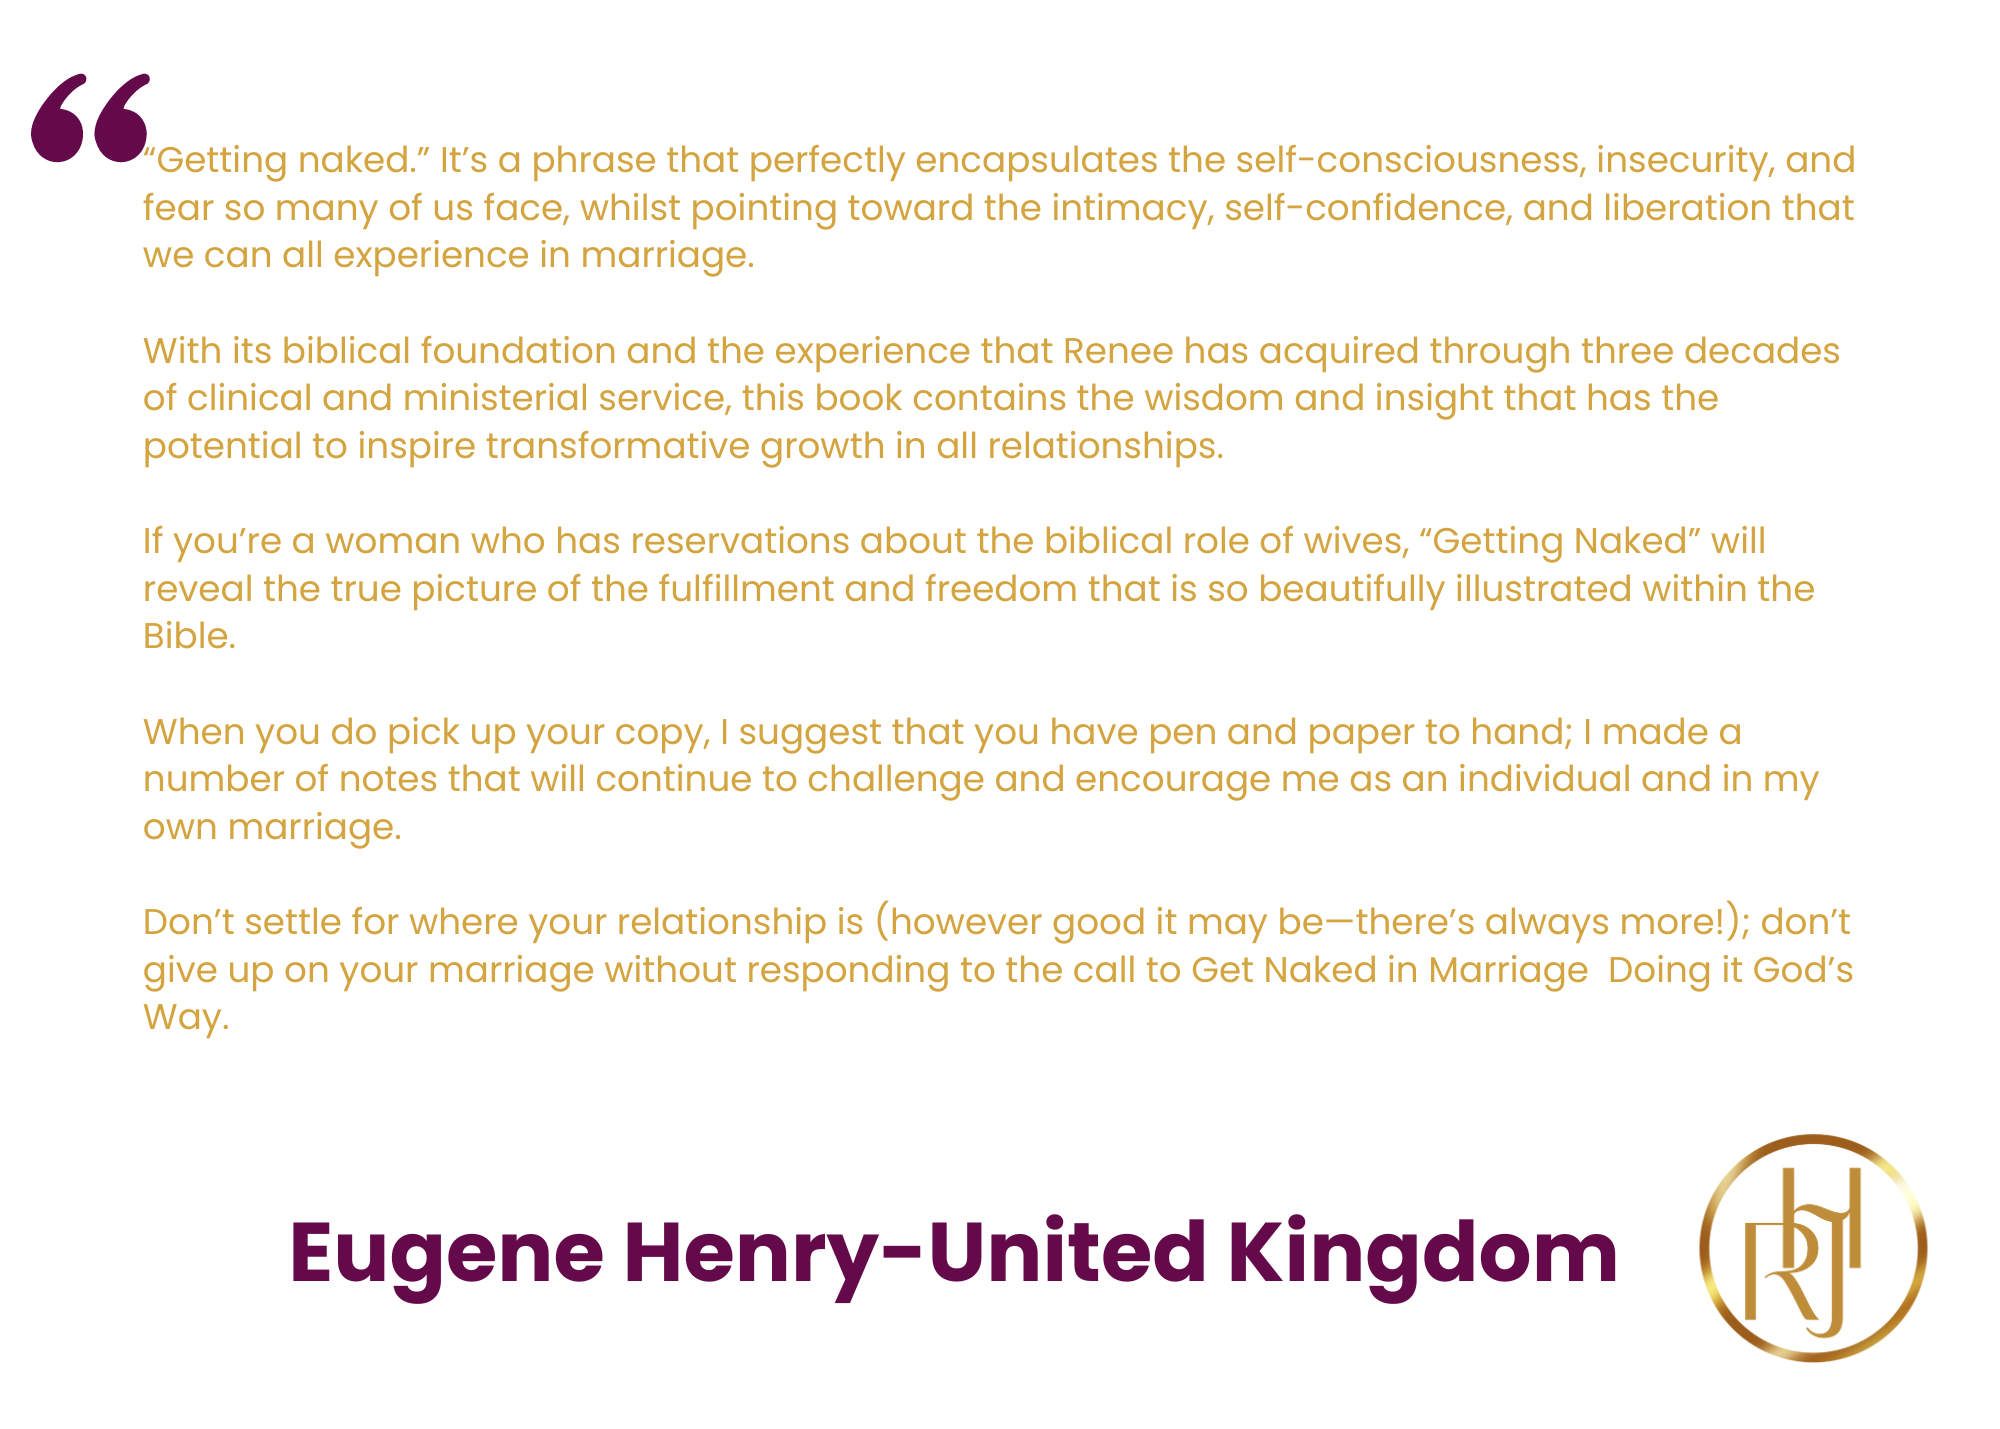 Testimonial from Eugene Henry of the United Kingdom